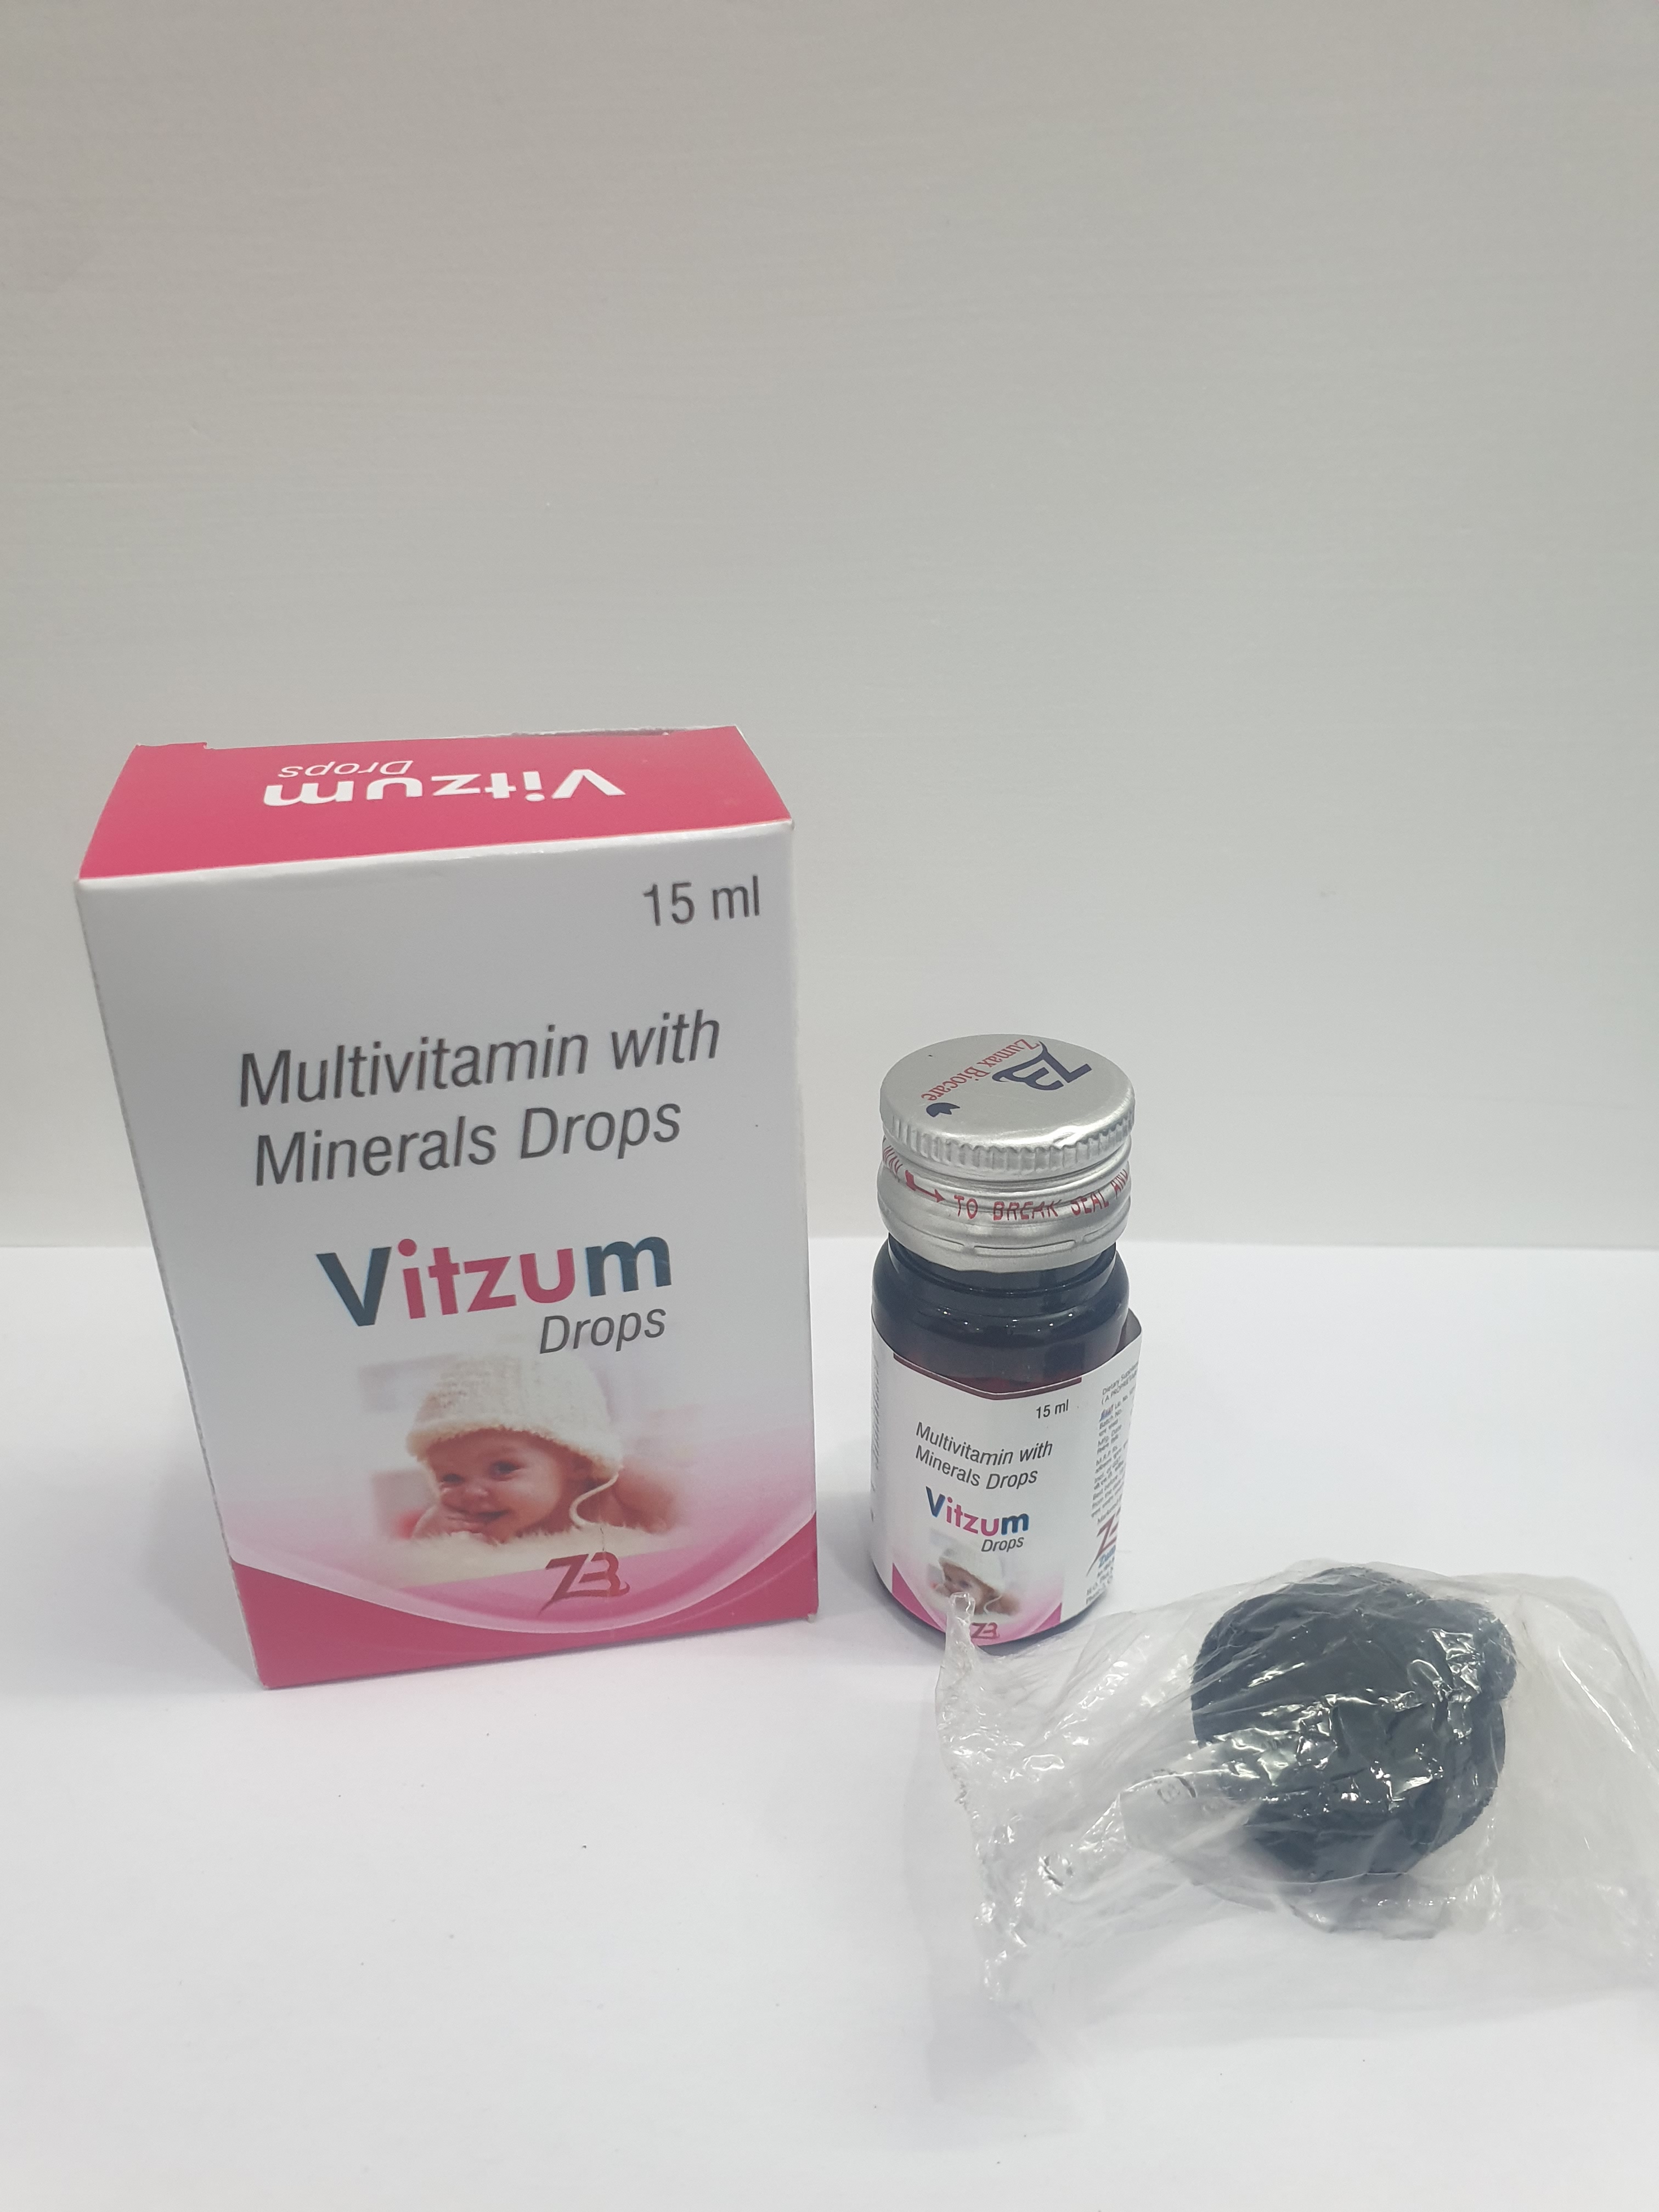 Product Name: Vitzum Drops, Compositions of Vitzum Drops are Multivitamin with Minerals Drops - Zumax Biocare